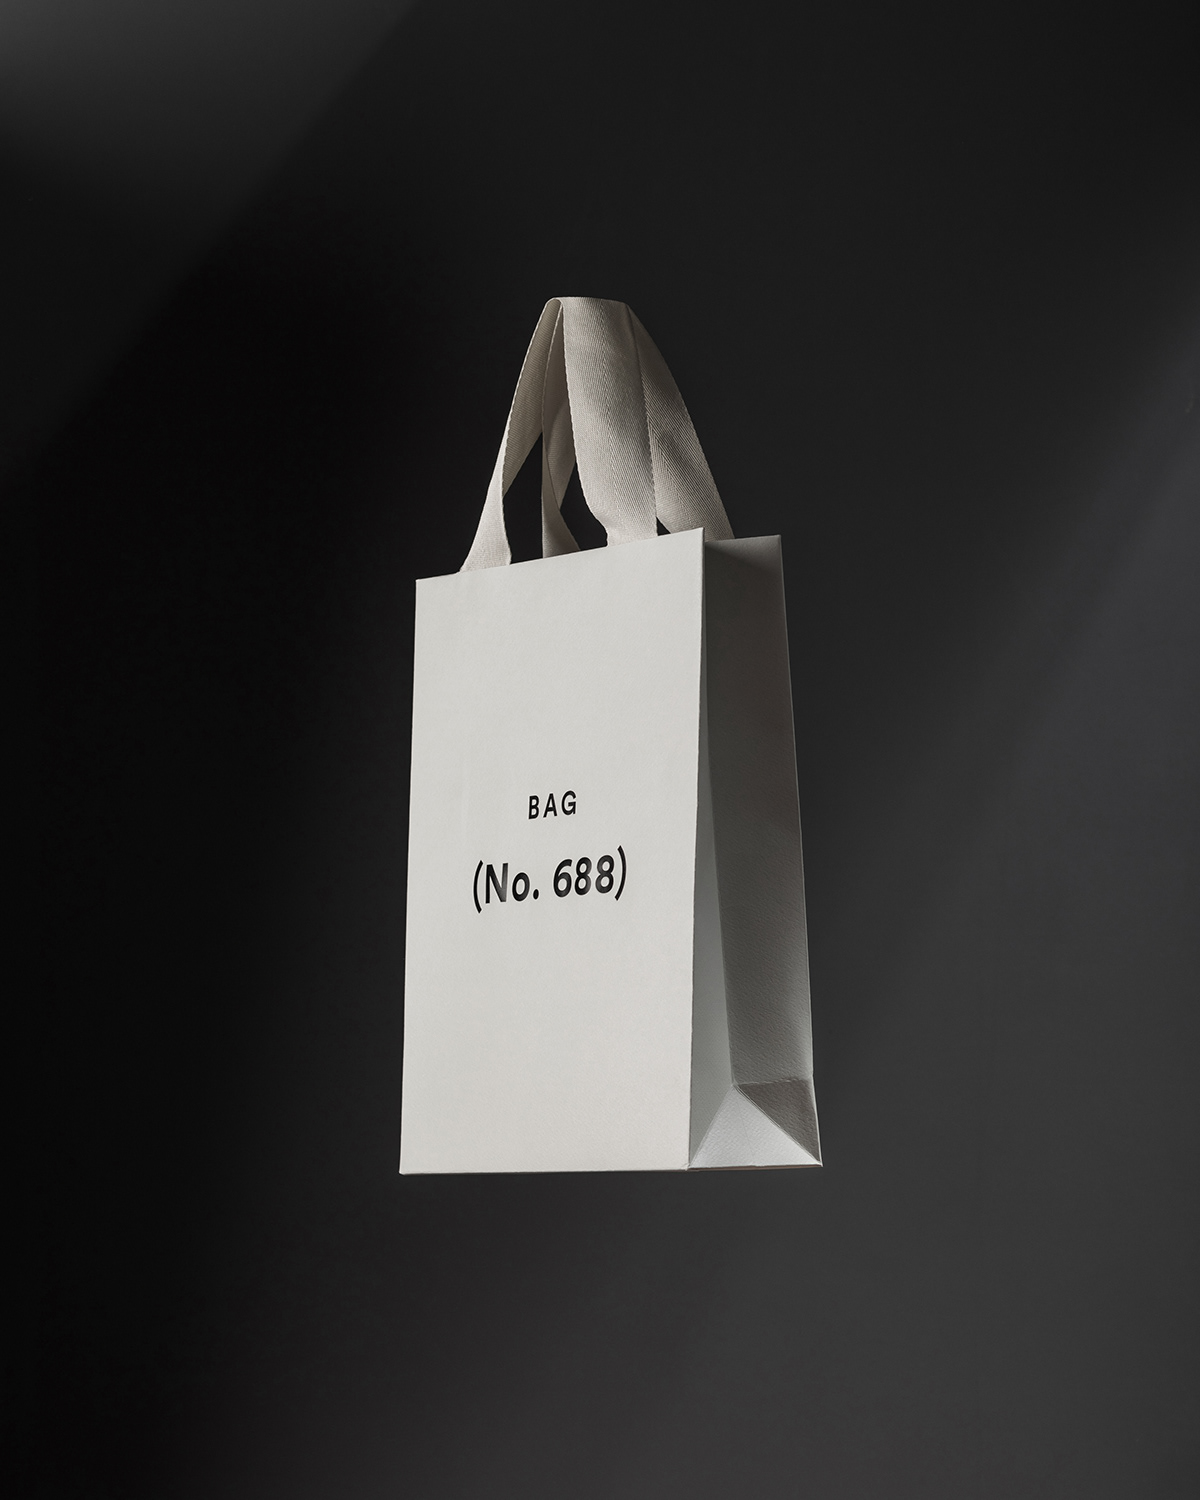 Floating cream carry bag with deboss logo in dark lit space